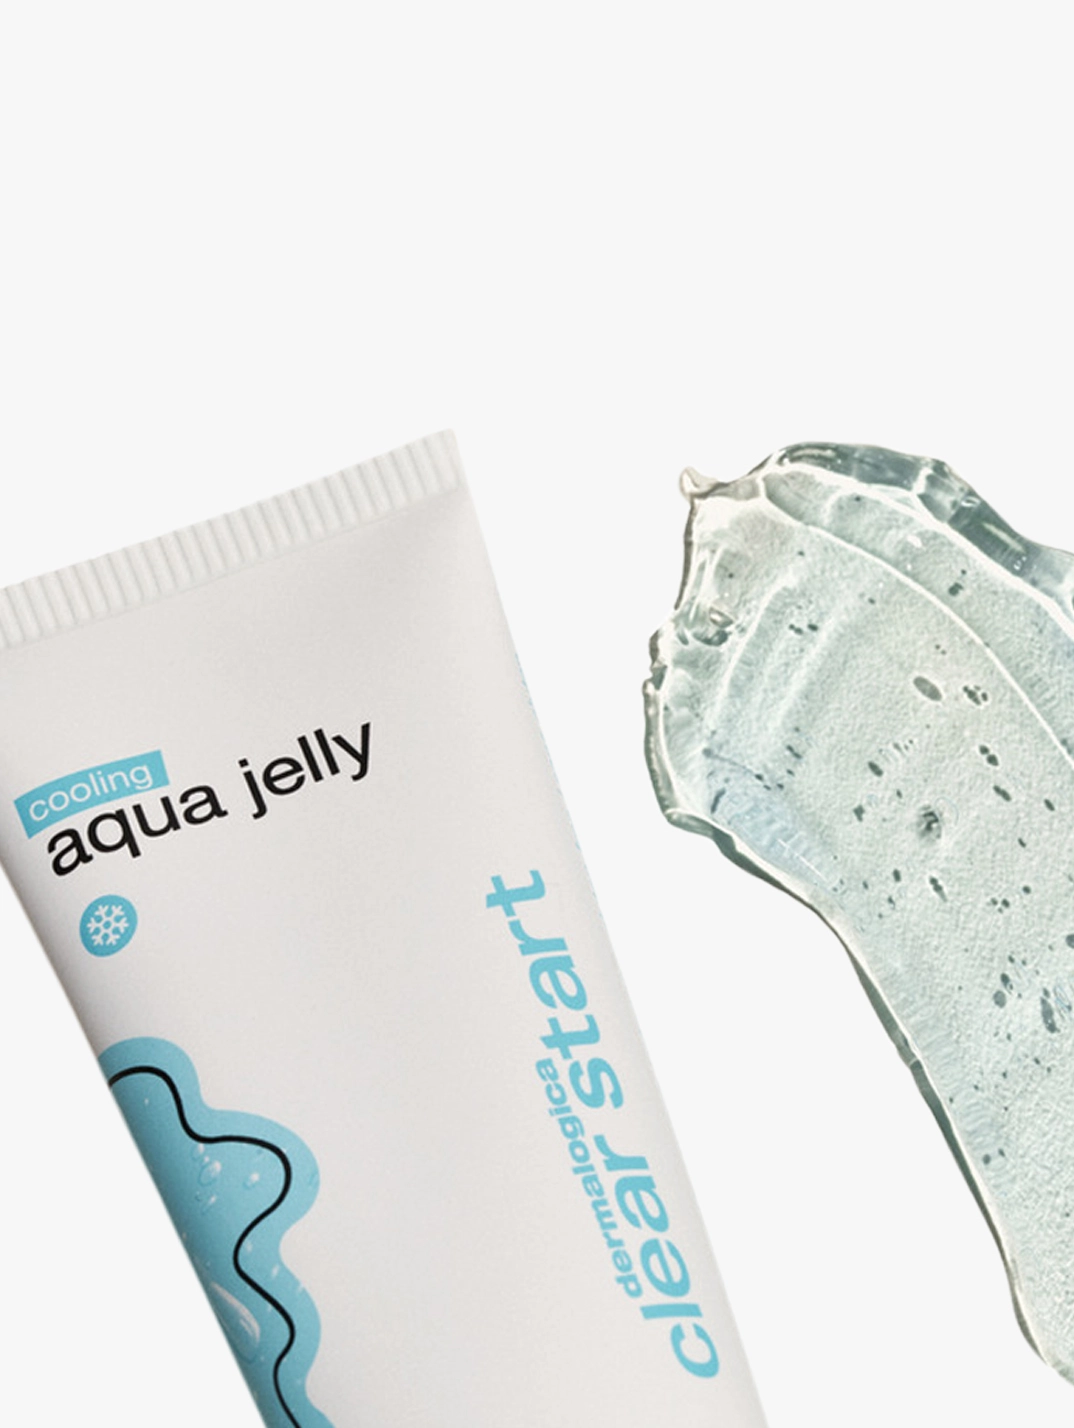 Dermalogica Clear Start Cooling Aqua Jelly 2 Oz., Moisturizers, Beauty &  Health